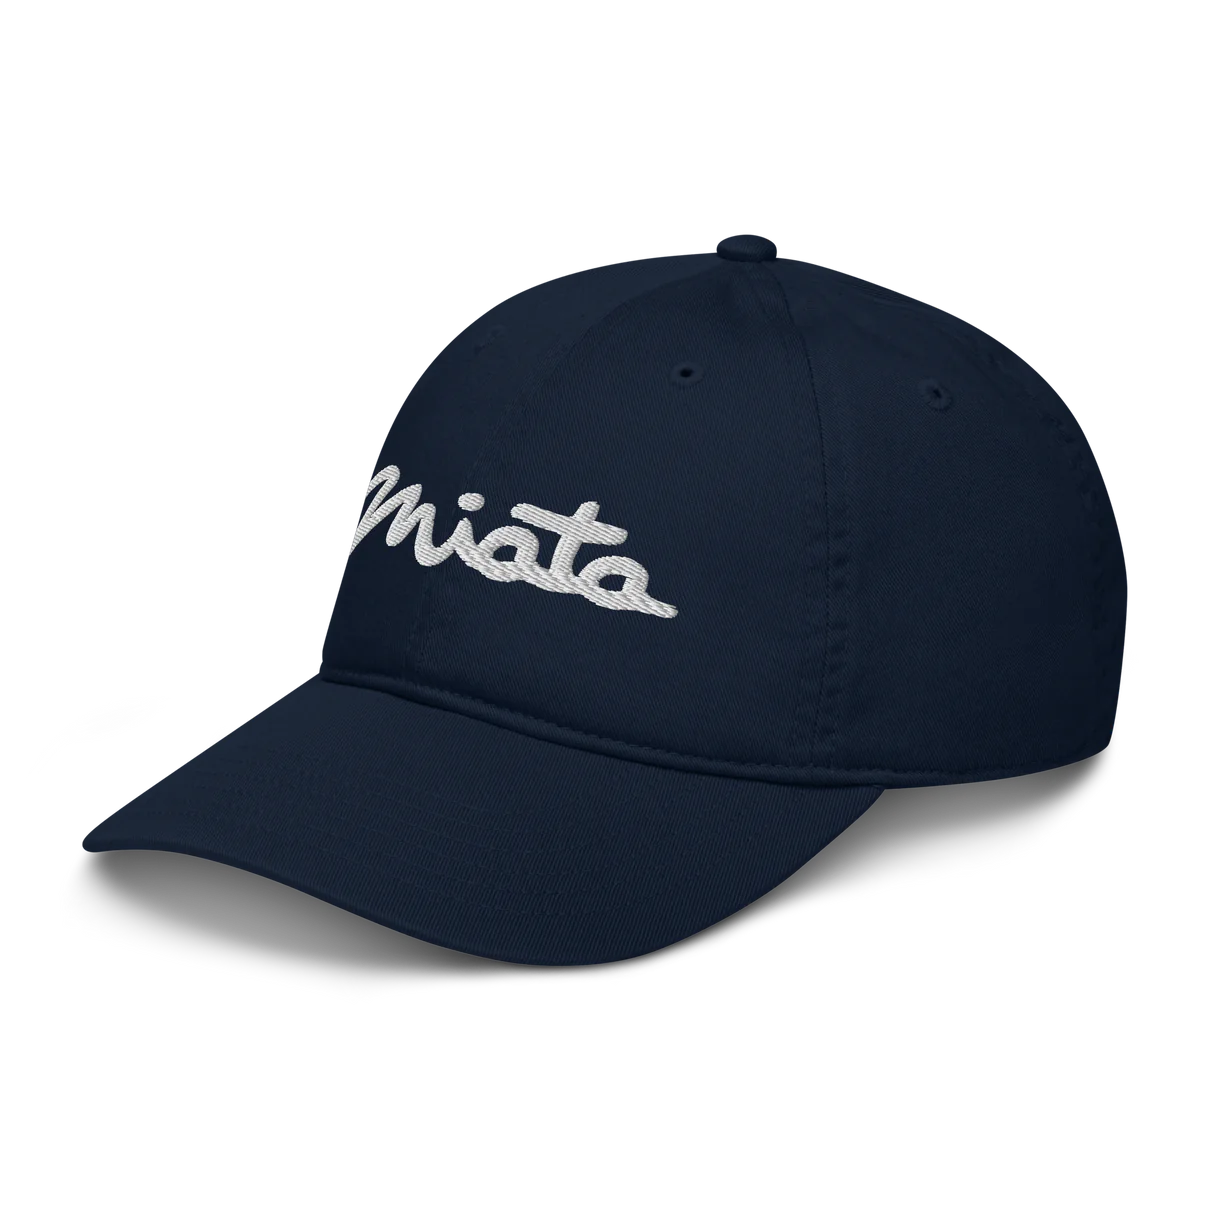 Miata Hats